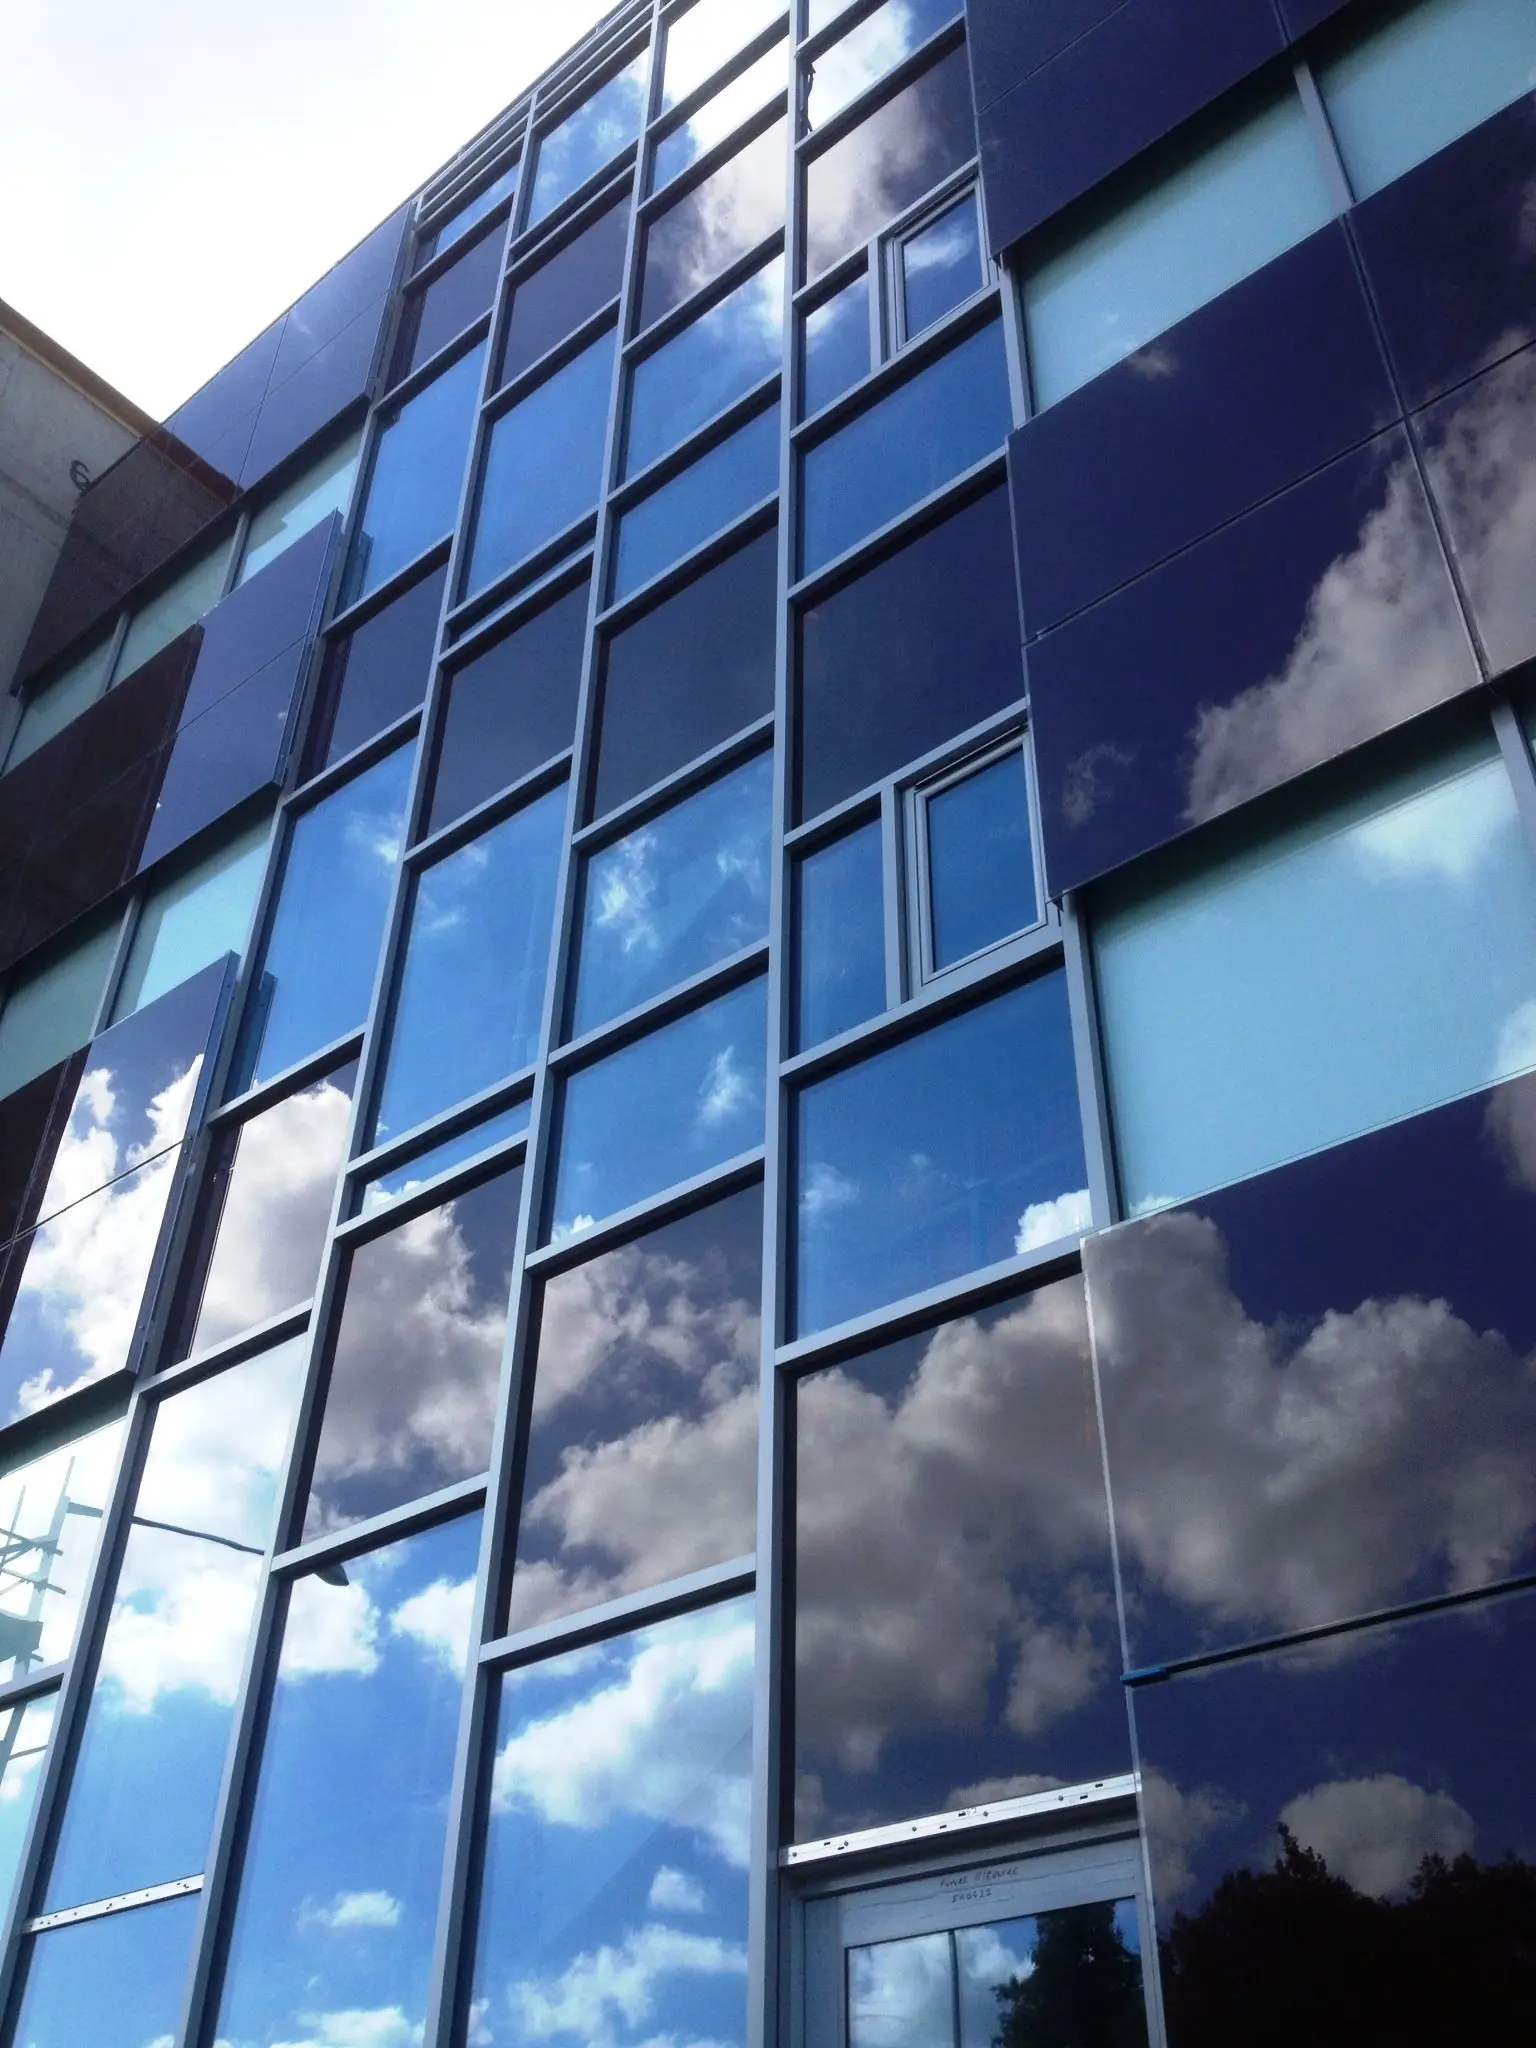 solar glazing panels - How does solar glazing work